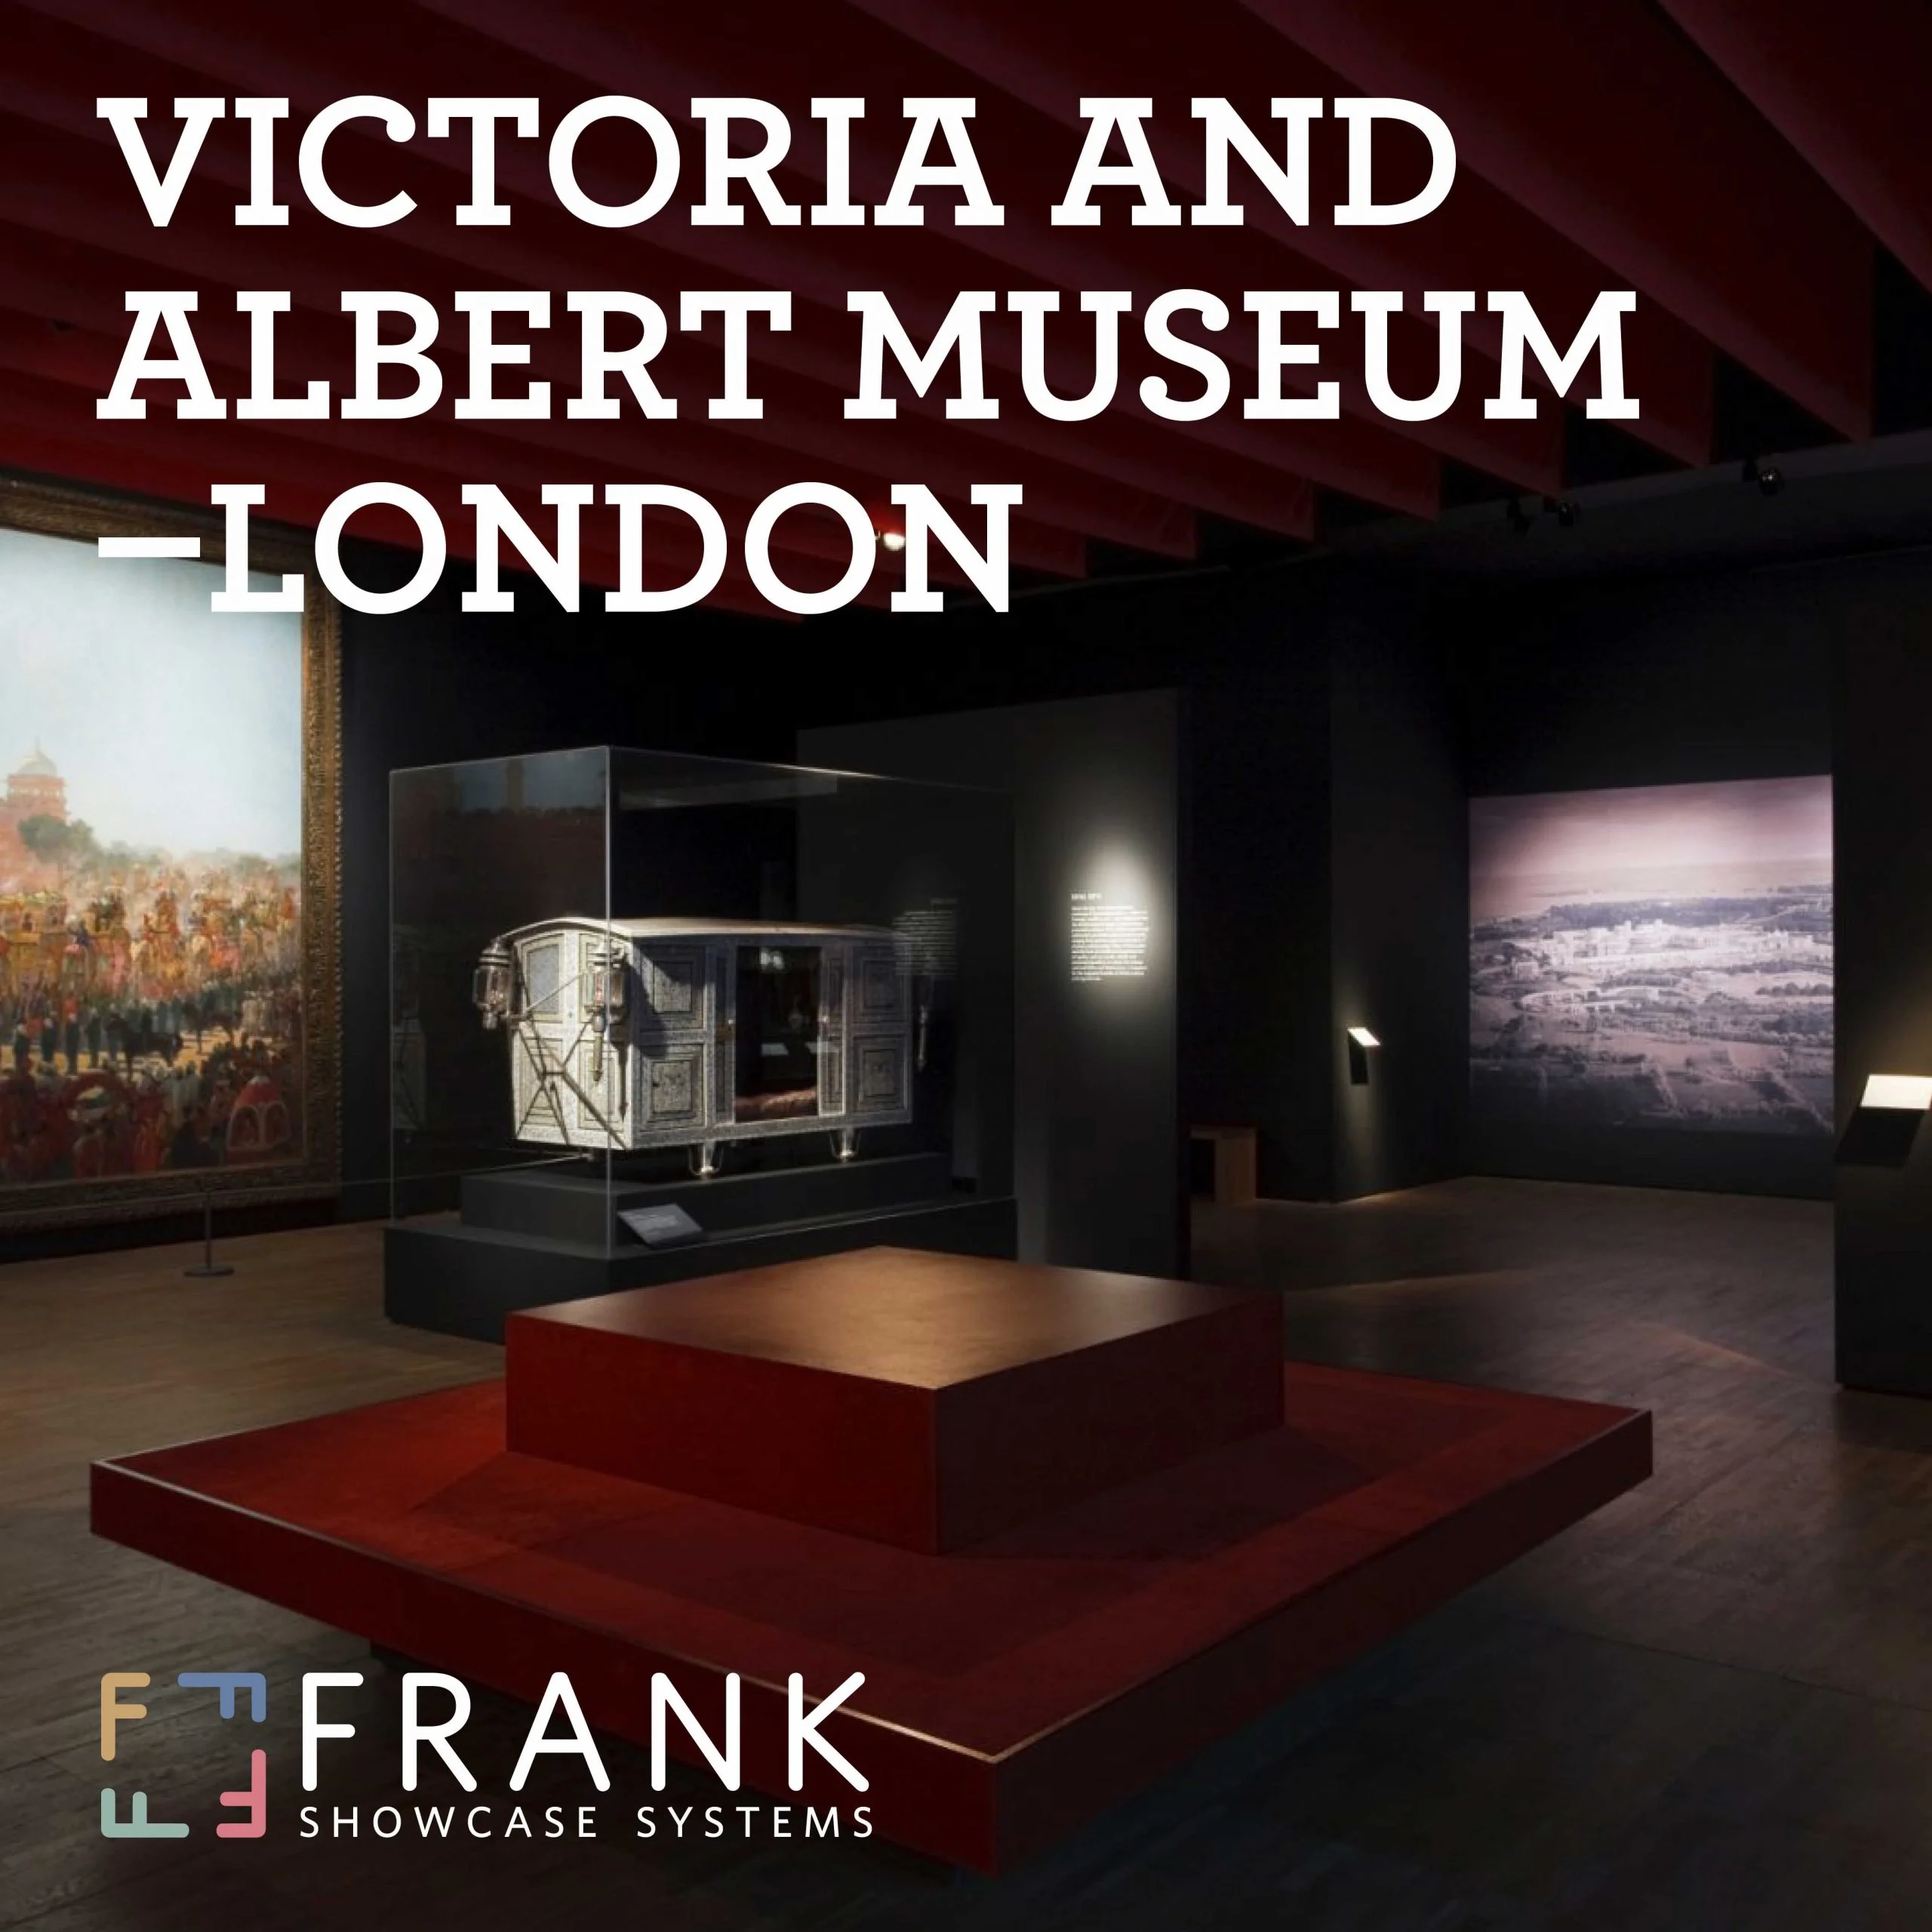 Victoria and Albert museum exhibition showcases